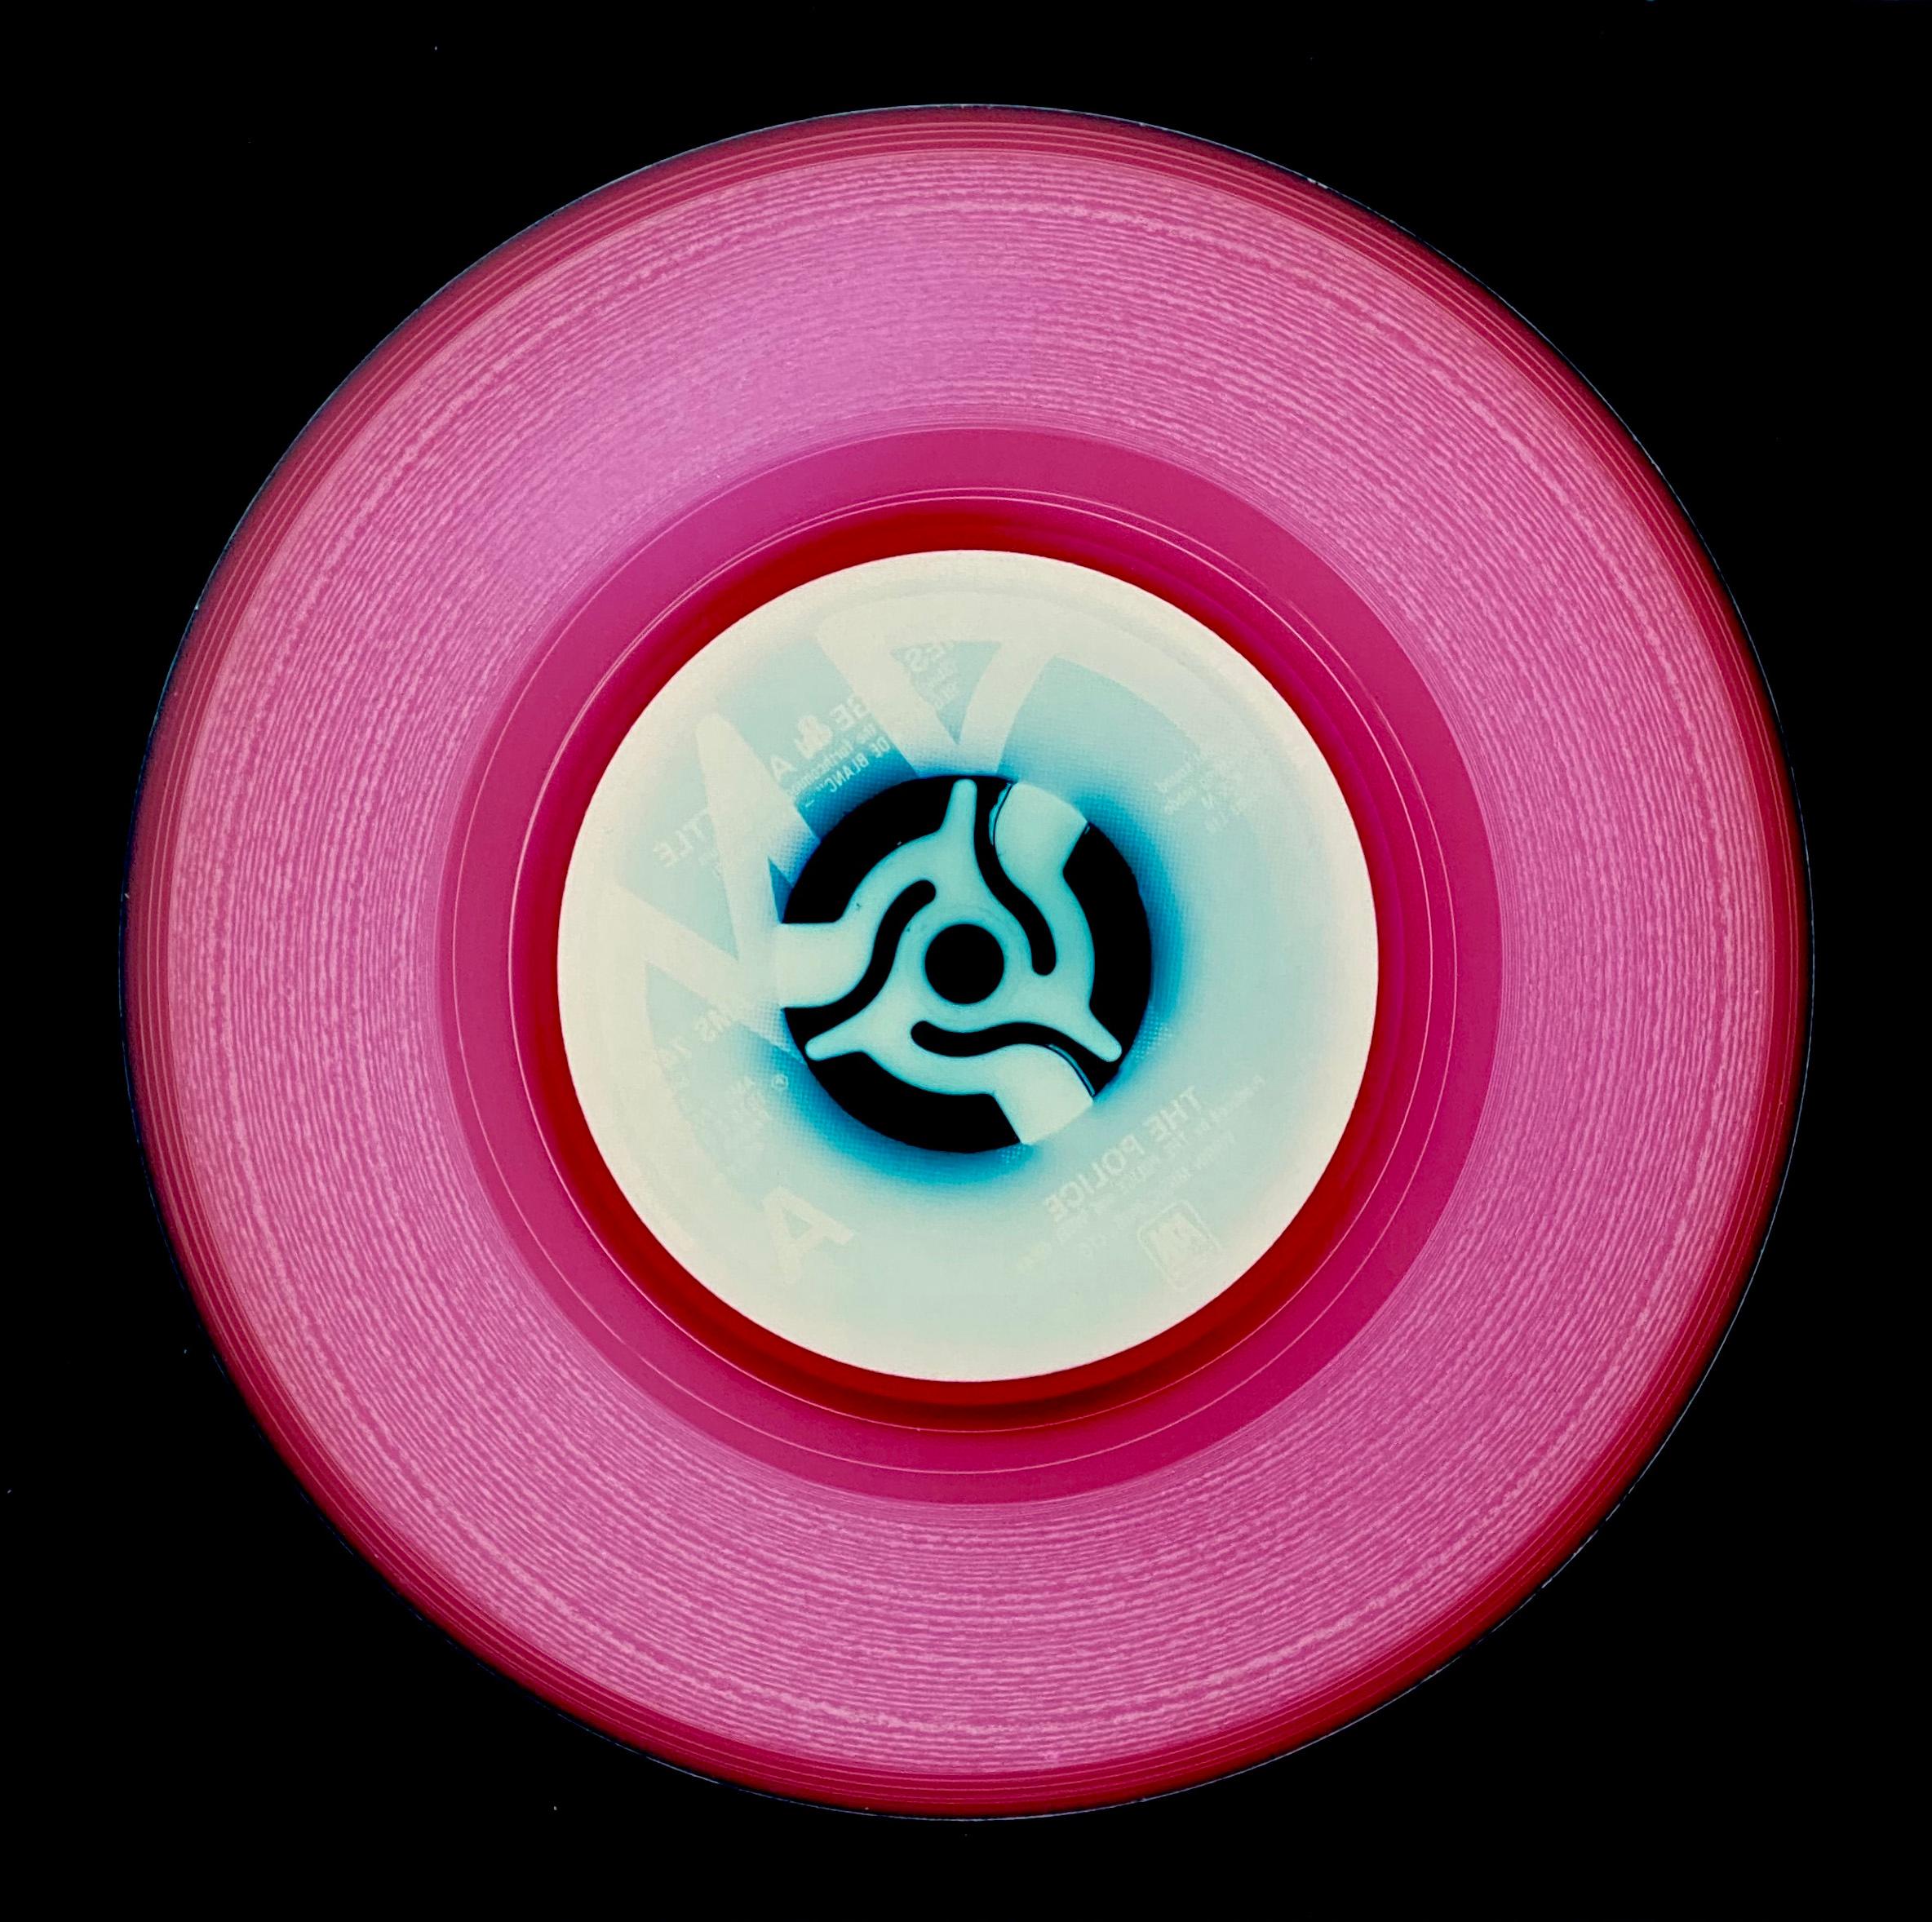 Heidler & Heeps Print - Vinyl Collection, A (Pink) - Conceptual, Pop Art, Color Photography